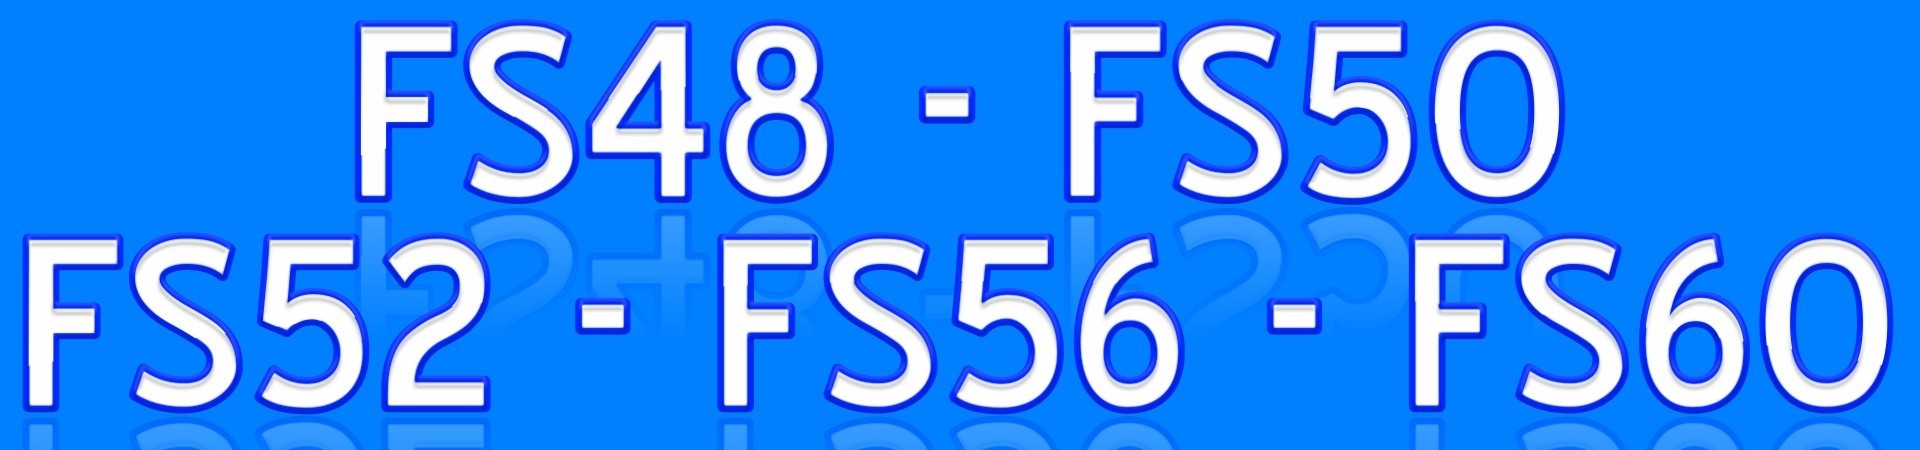 FS48 FS50 FS52 FS56 FS60